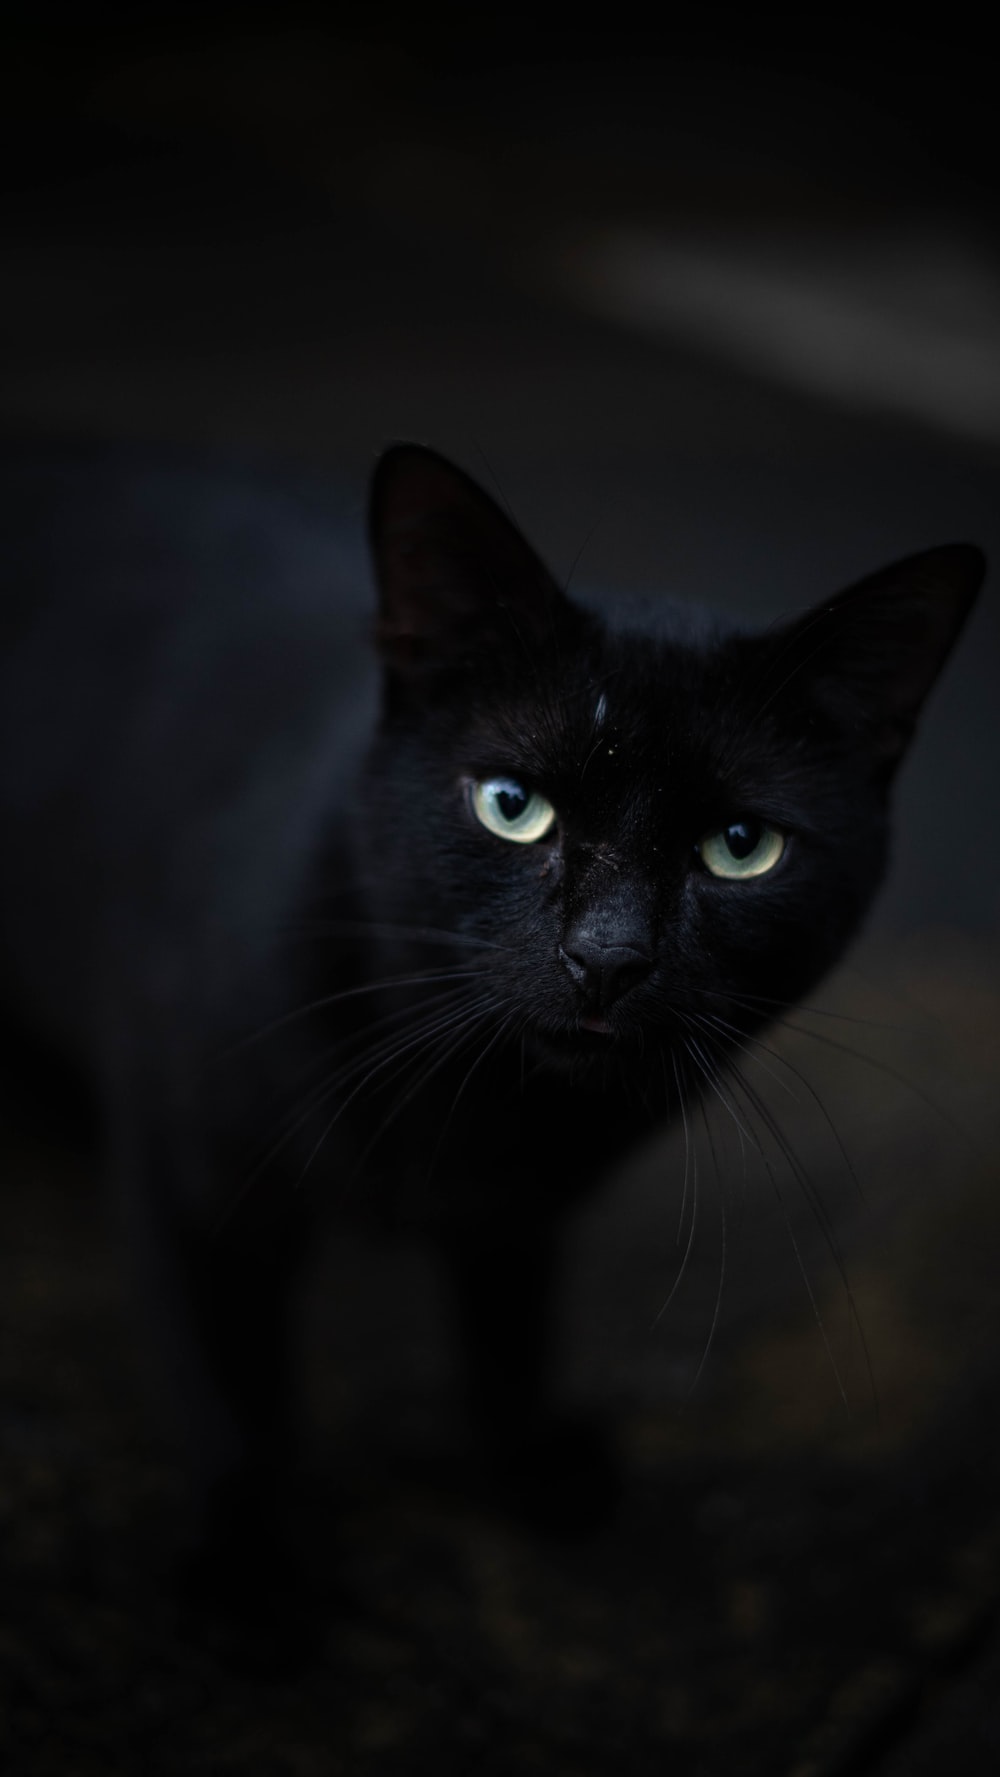 black cat with green eyes photo Black Image on Unsplash 1000x1777